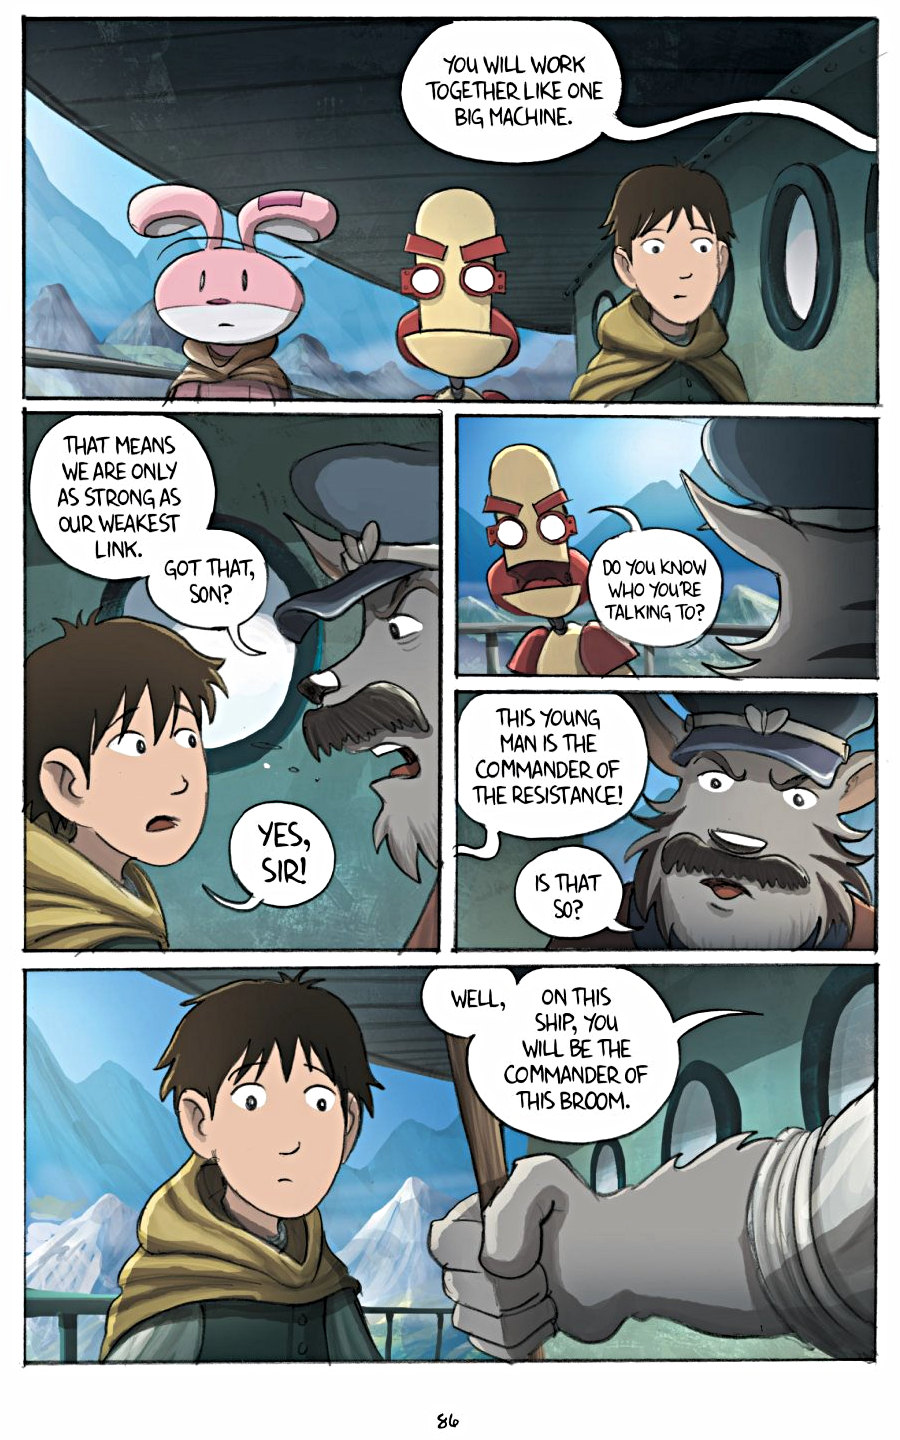 page 86 of amulet 3 cloud searchers graphic novel by kazu kibuishi